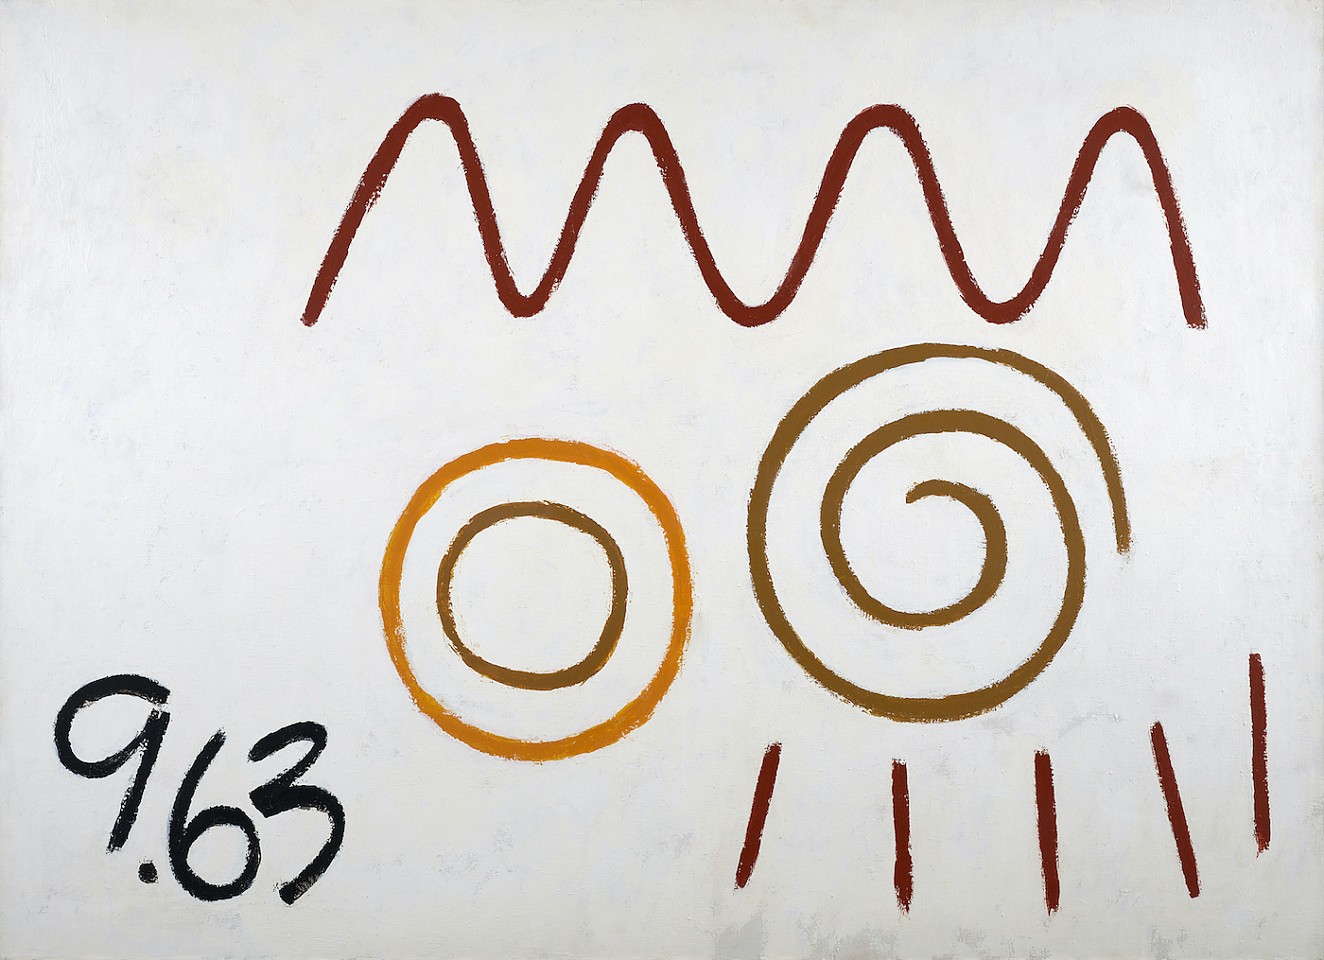 Raymond Hendler, Dawning (No.18), 1963
Magna on linen, 58 x 80 in. (147.3 x 203.2 cm)
HEN-00009